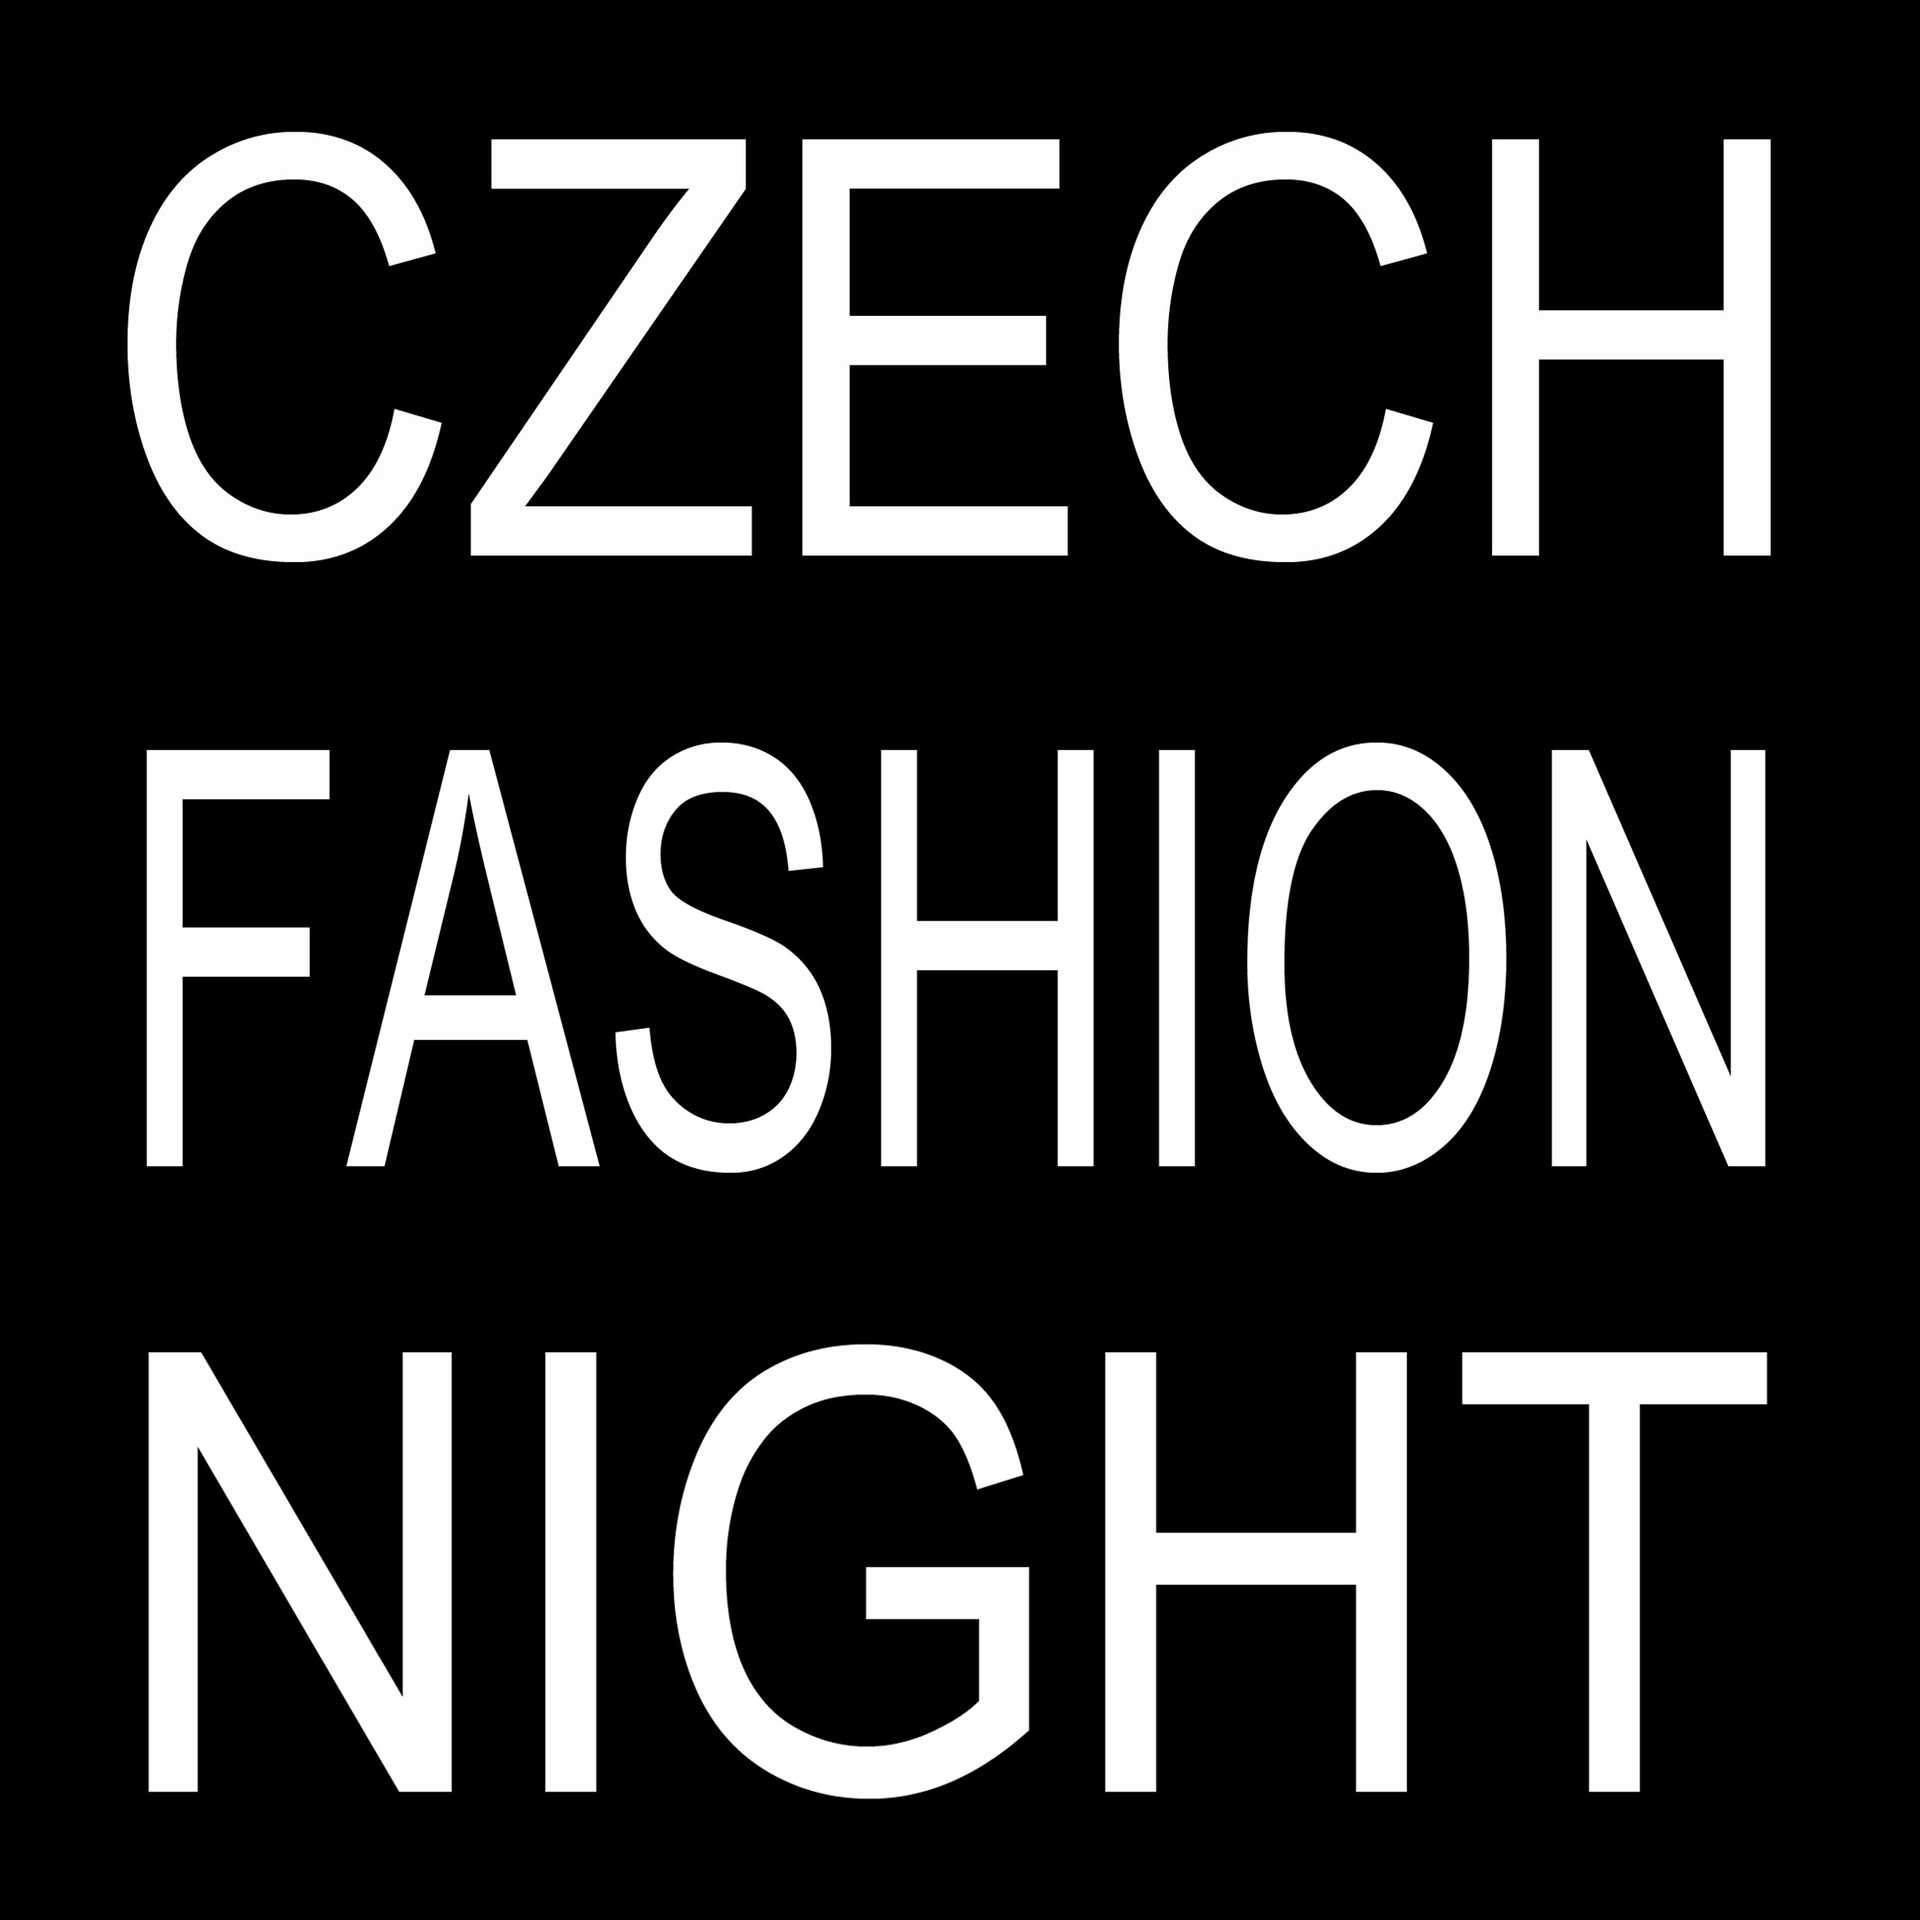 Czech Fashion Night 